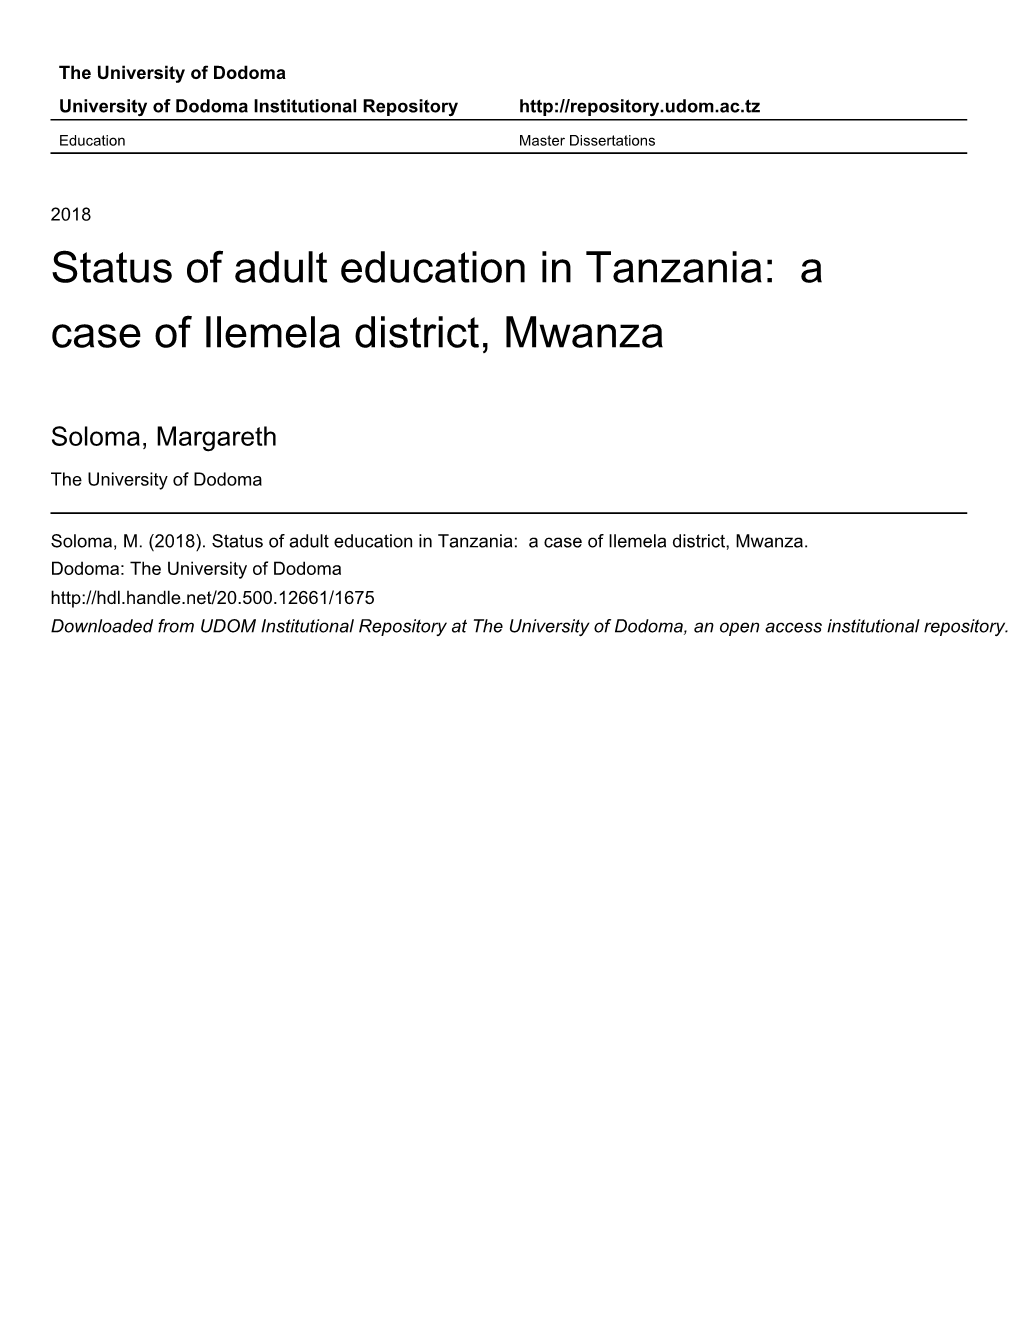 Status of Adult Education in Tanzania: a Case of Ilemela District, Mwanza